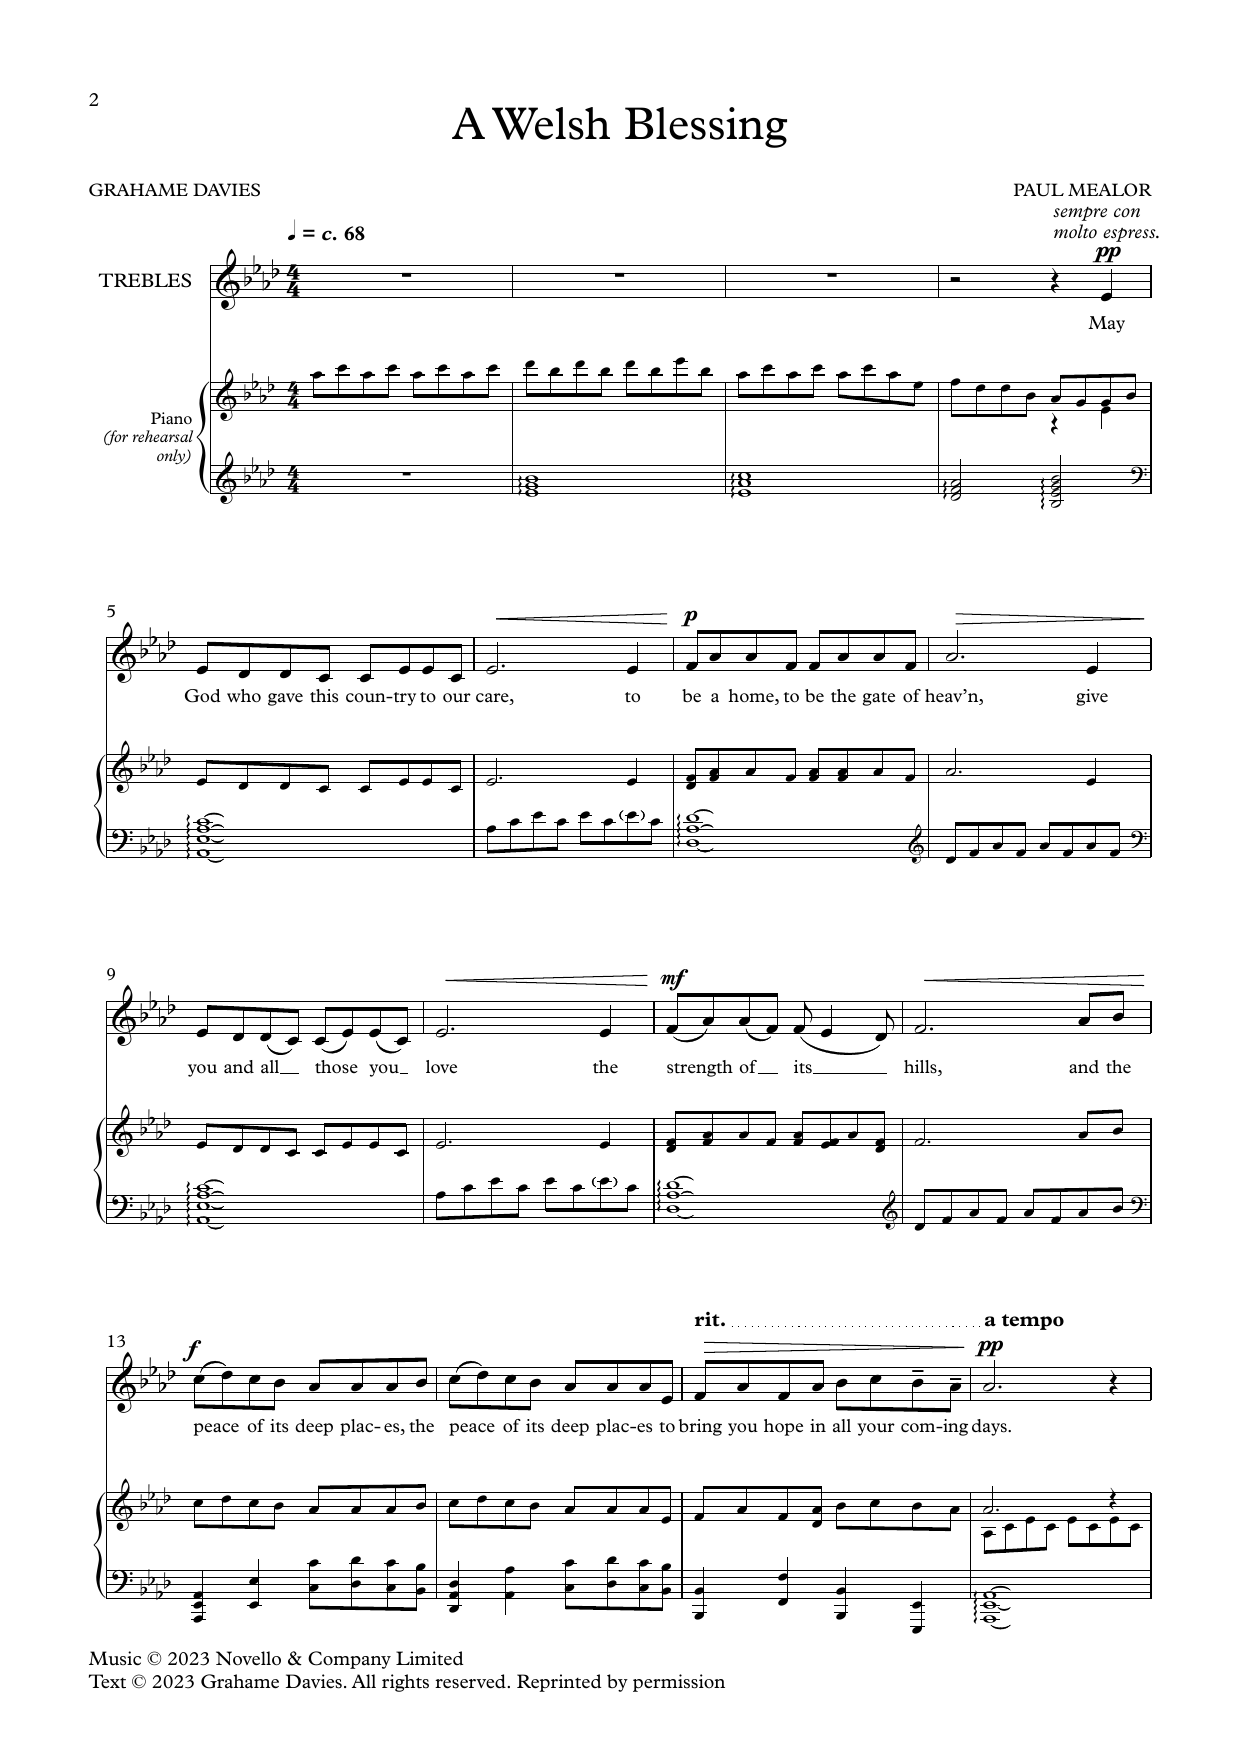 Paul Mealor A Welsh Blessing sheet music notes printable PDF score